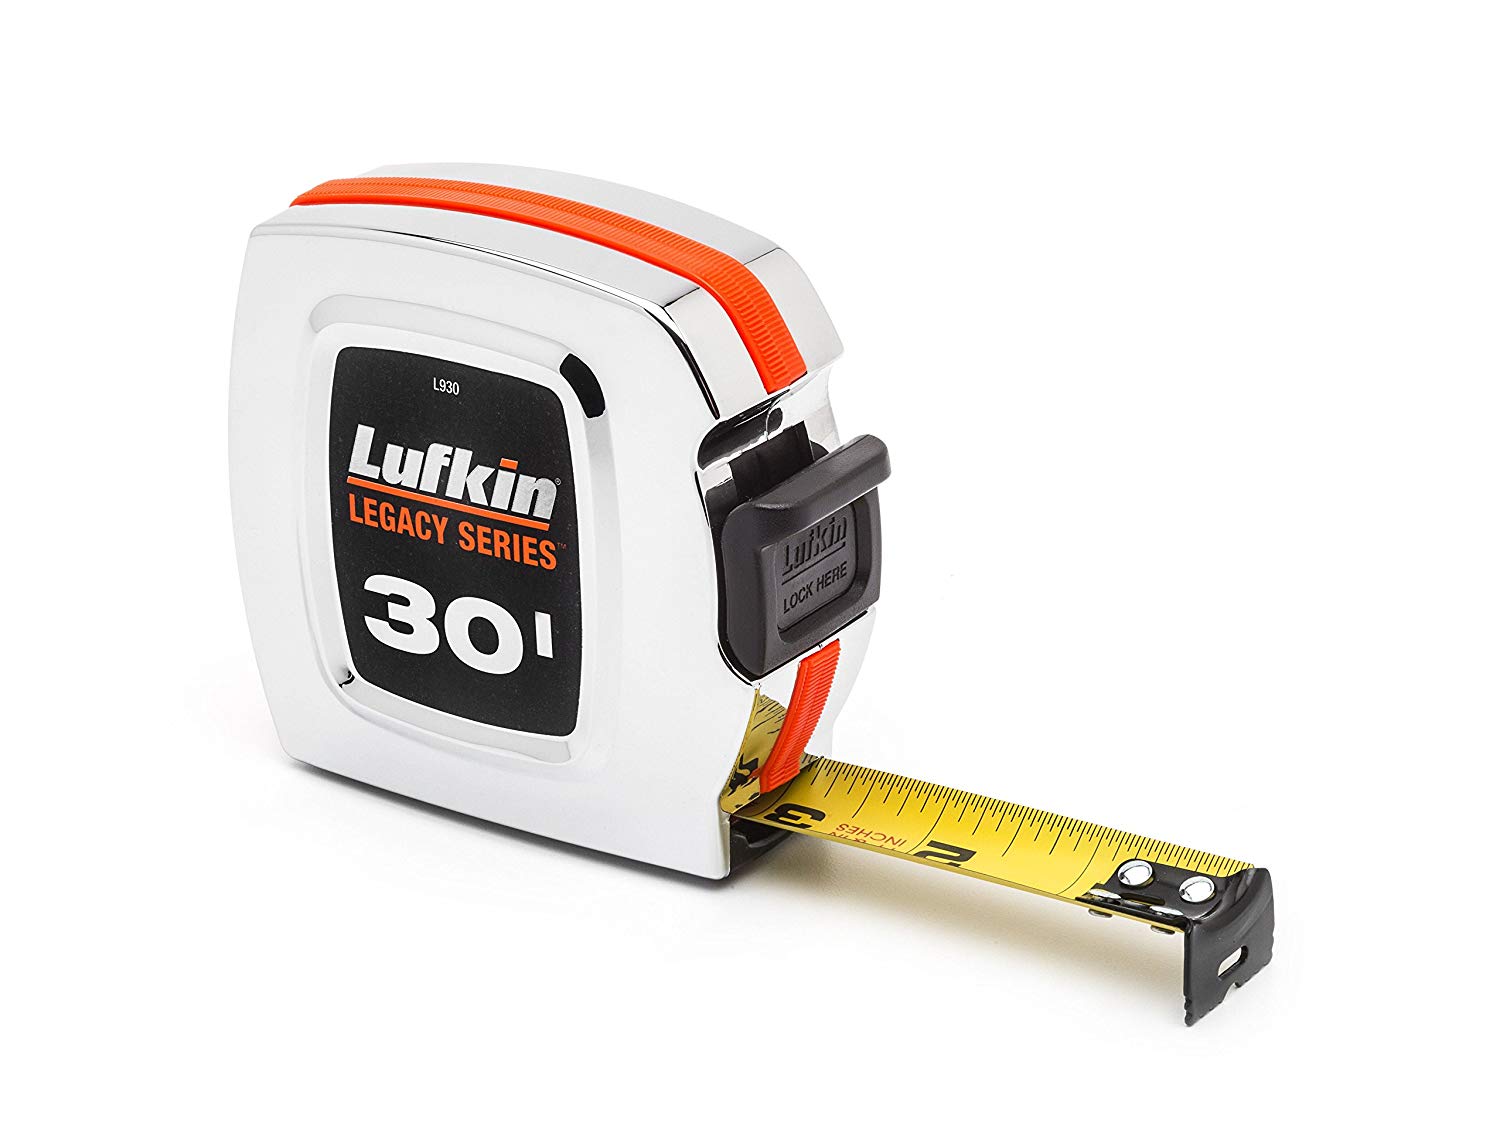 Lufkin L930 1" x 30' Legacy Series Tape Measure